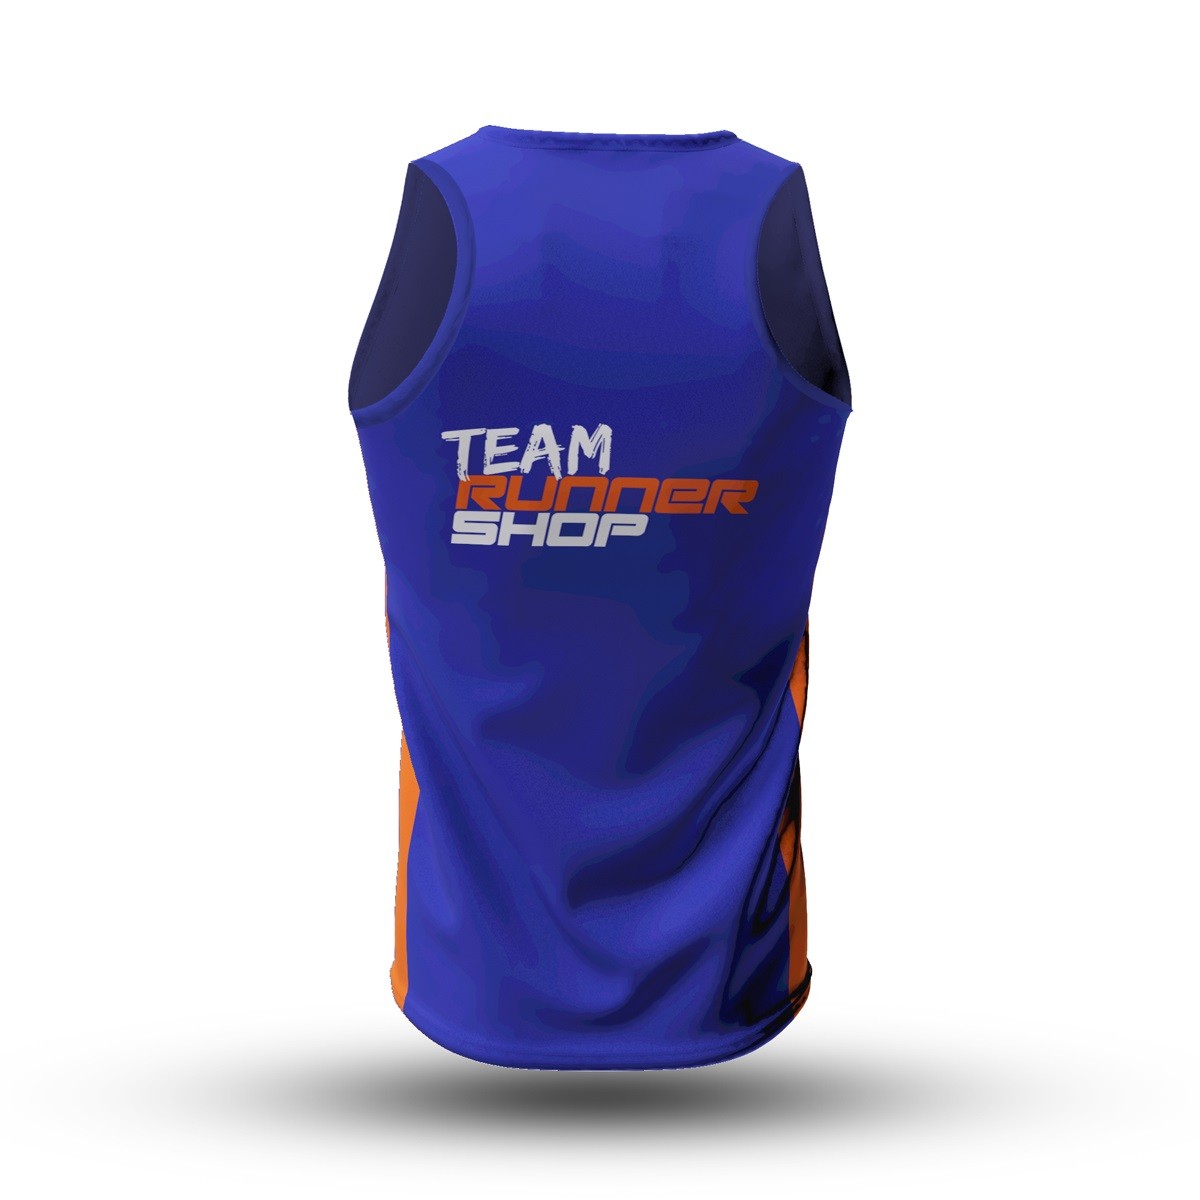 Camiseta Team Regata - Baby Look| RUNNER SHOP